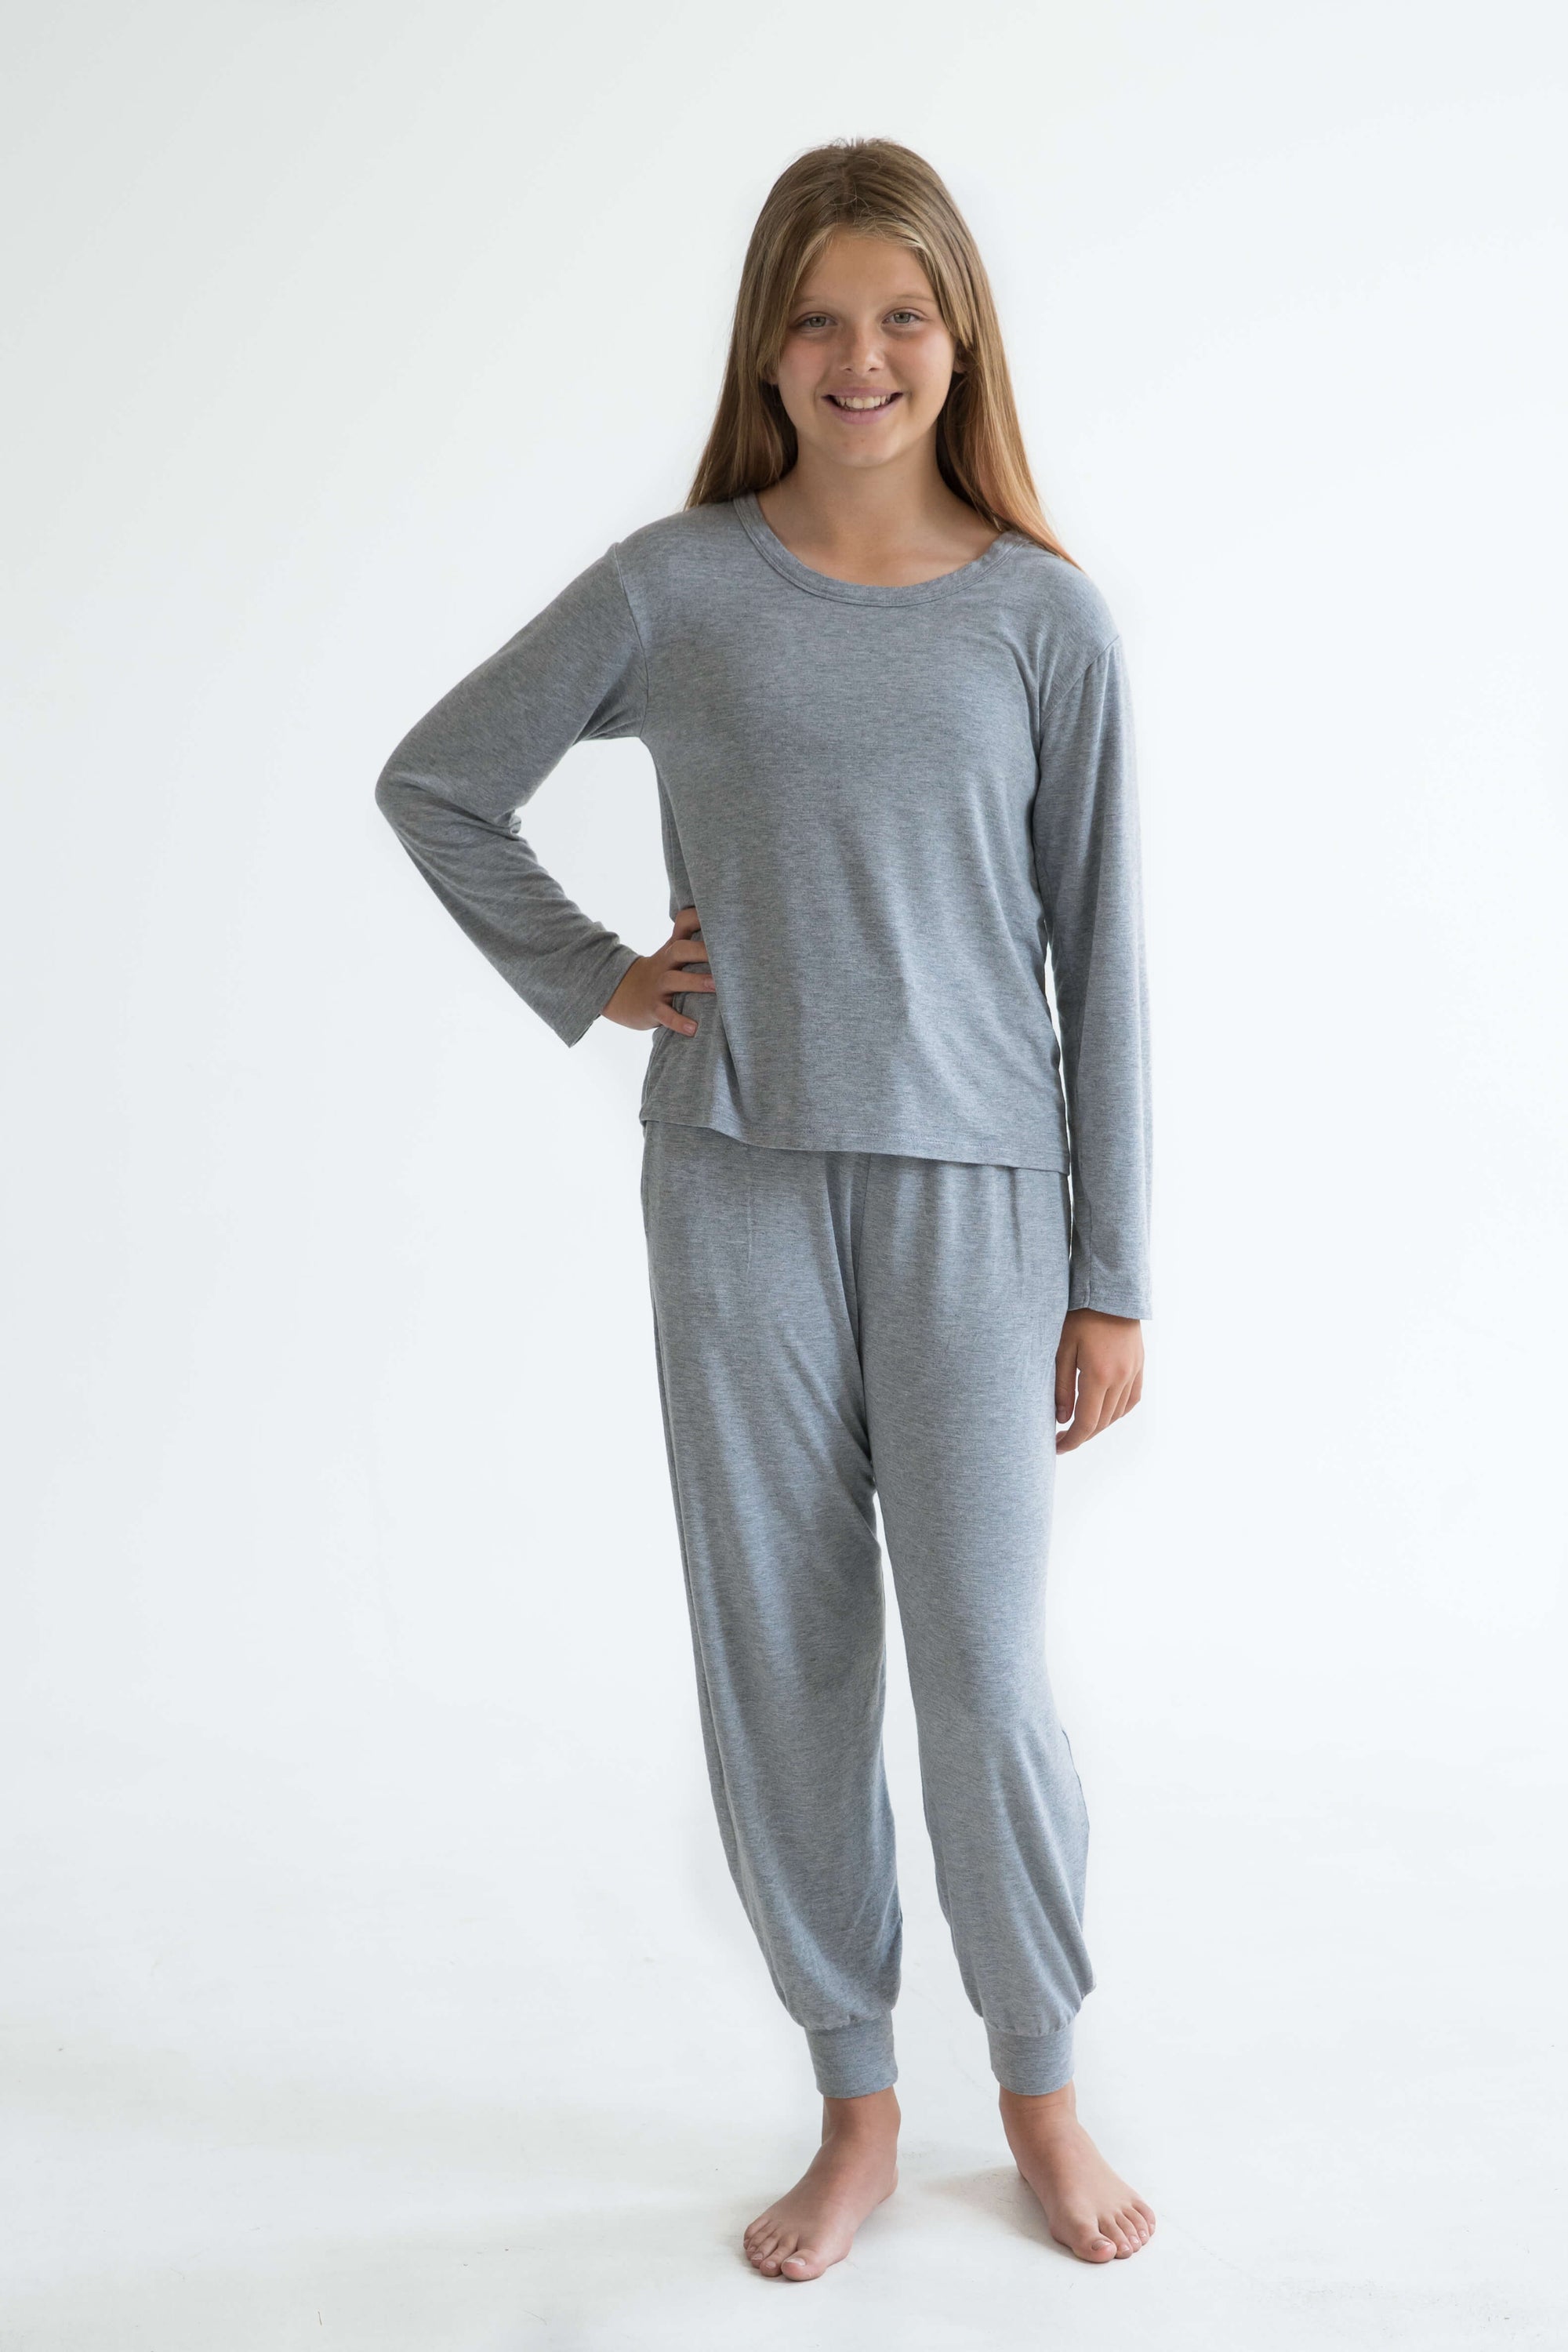 grey teen girls winter long sleeve bamboo pyjama top by Love Haidee Australia front